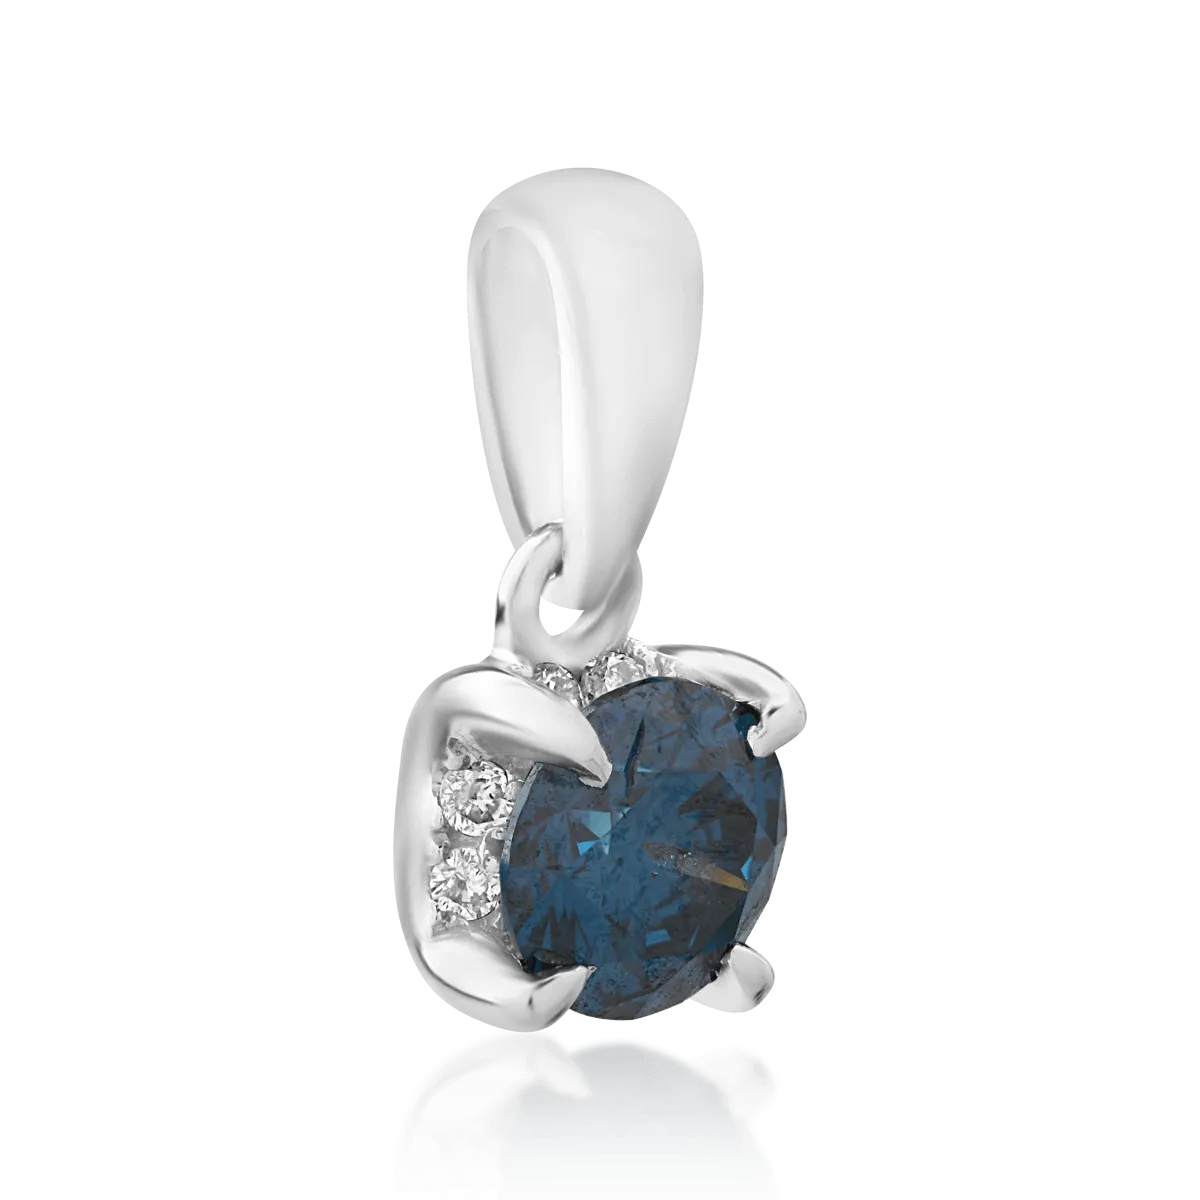 18K white gold pendant with 0.33ct blue diamond and 0.04ct transparent diamonds